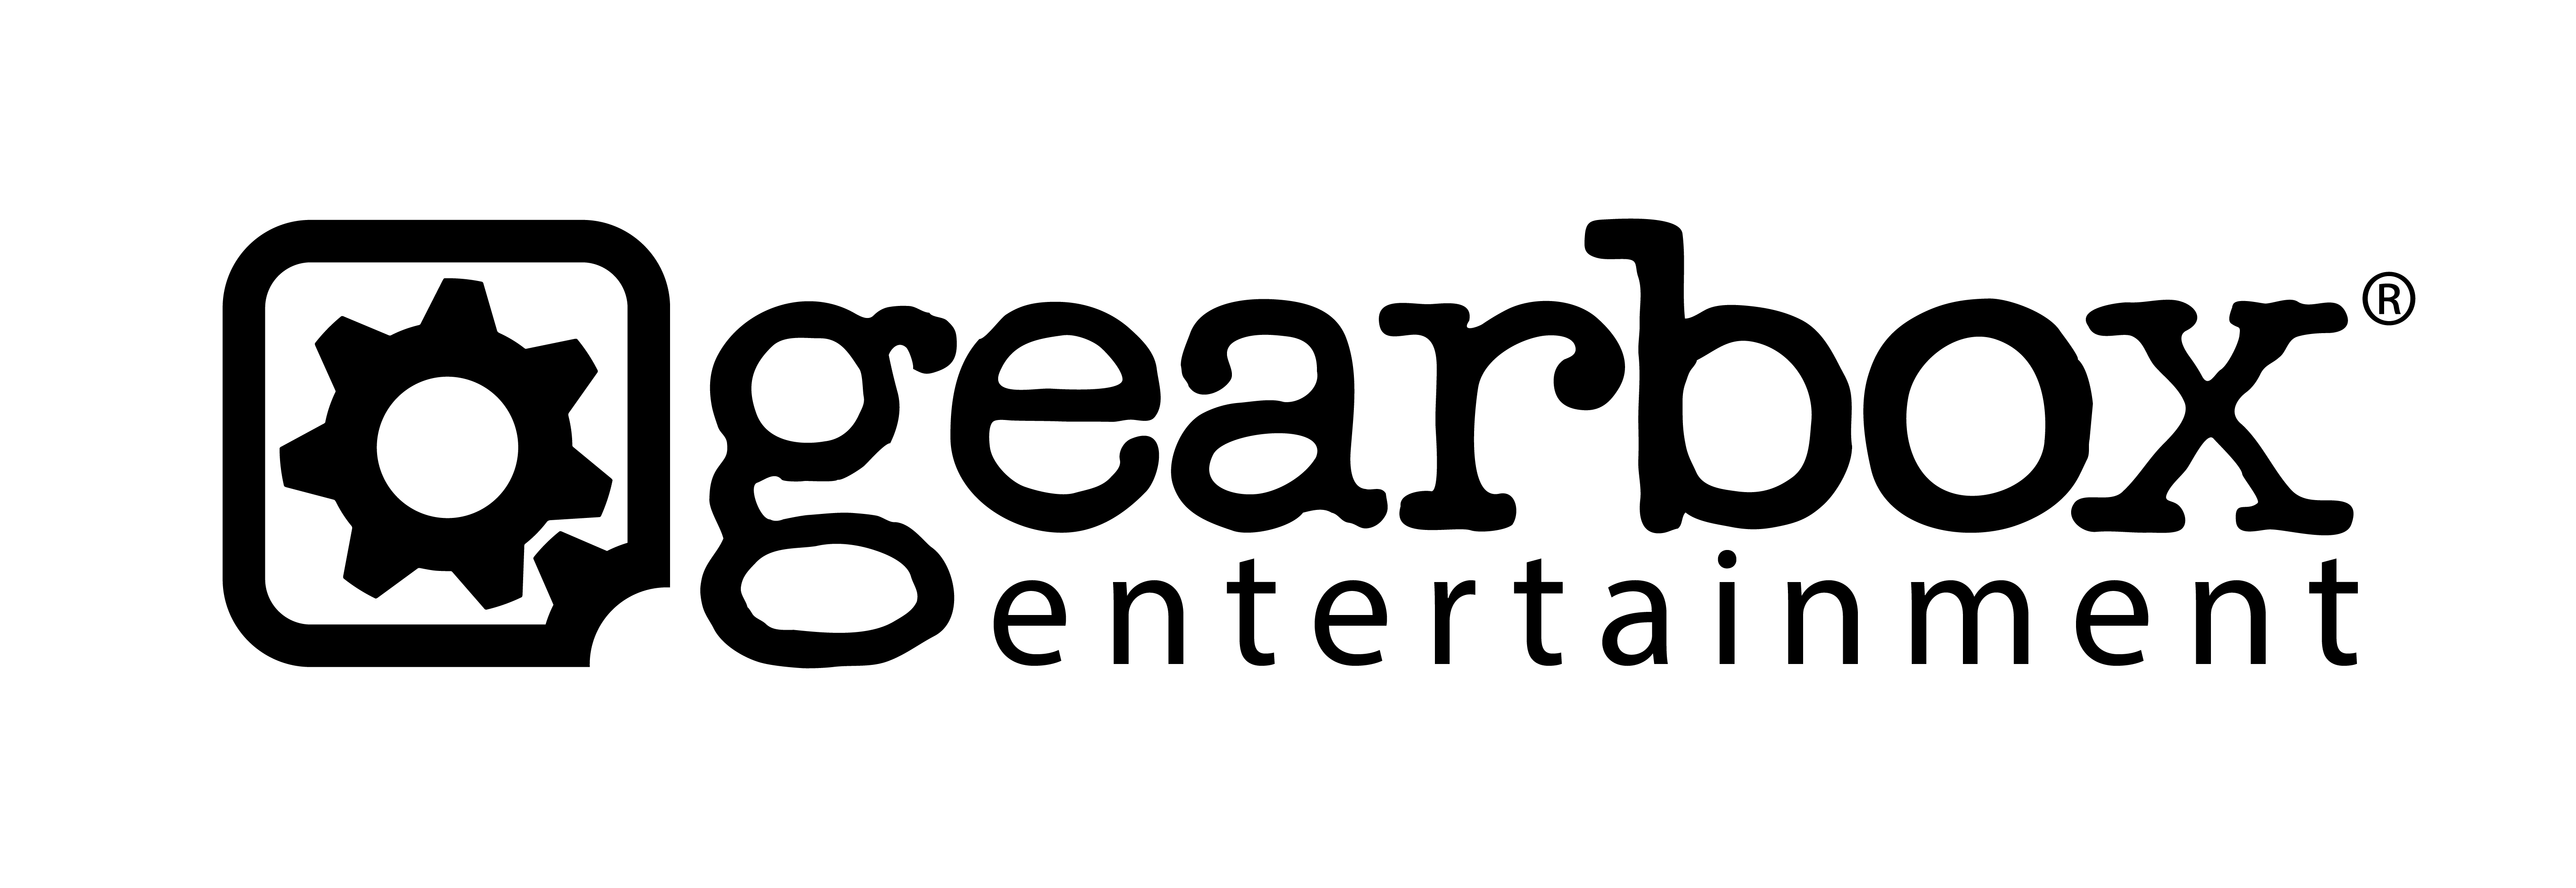 Gearbox Entertainment Company Company Logo